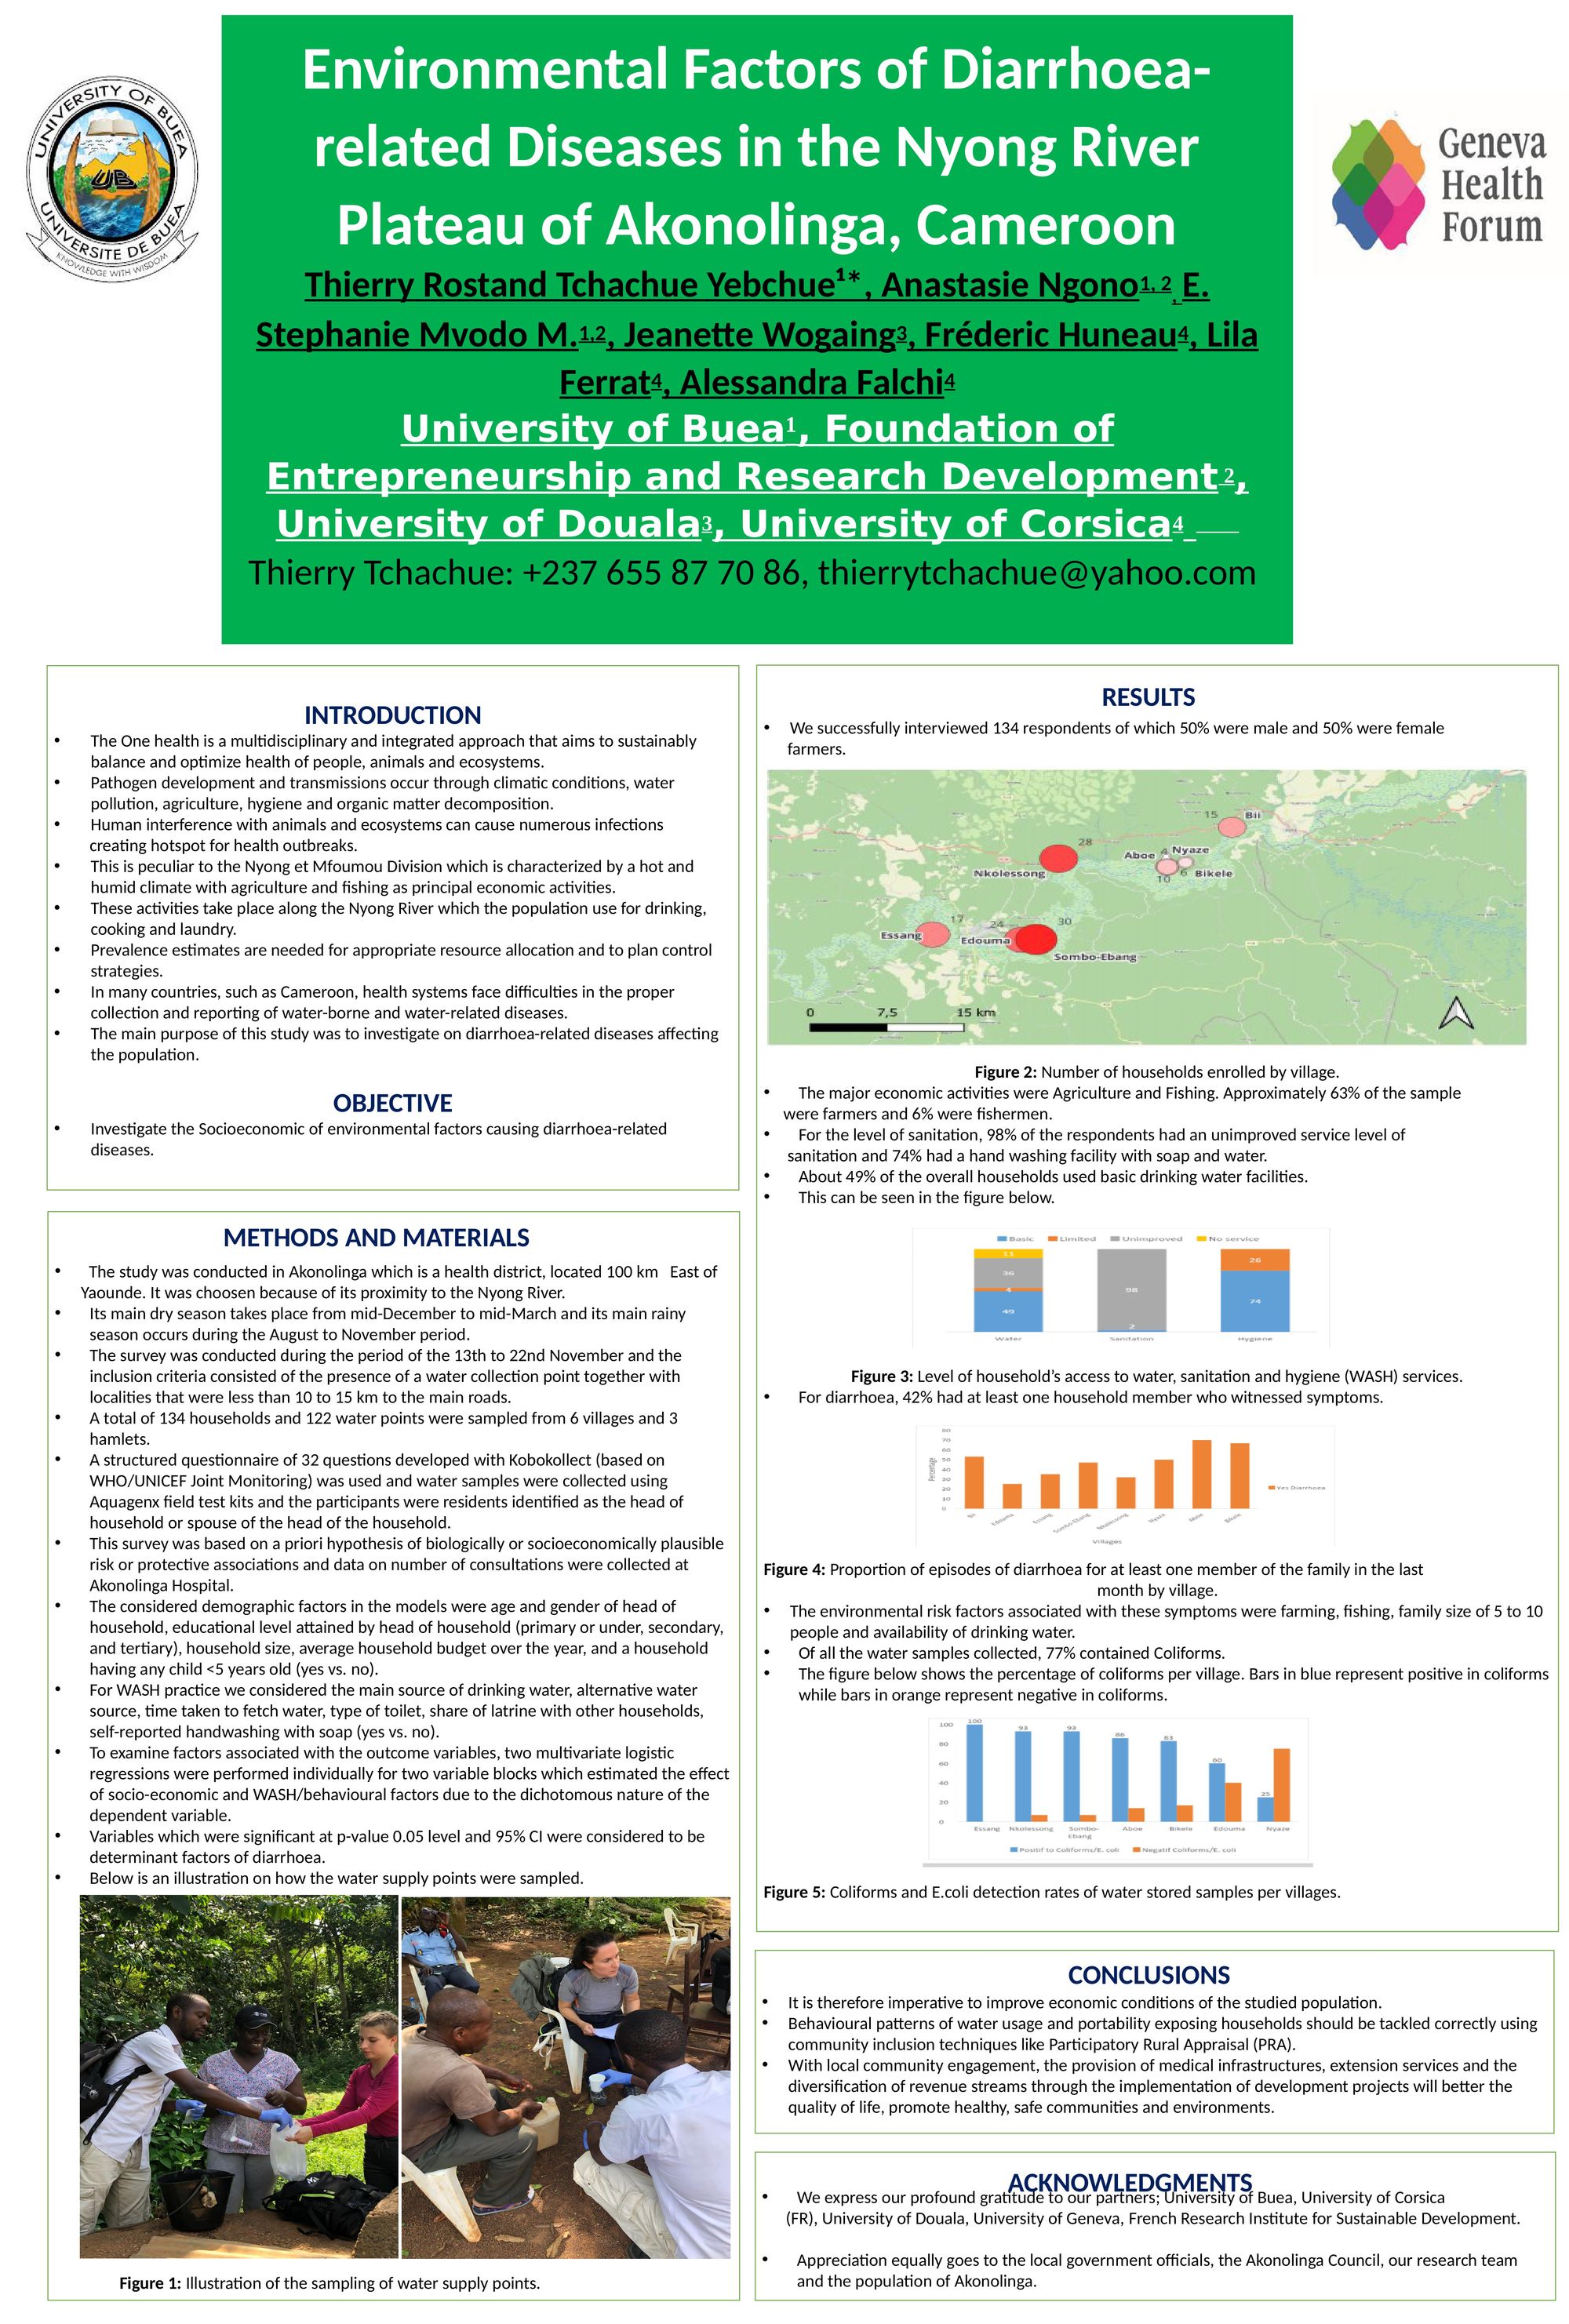 Environmental Factors of Diarrhoea-related Diseases in the Nyong River Plateau of Akonolinga, Cameroon